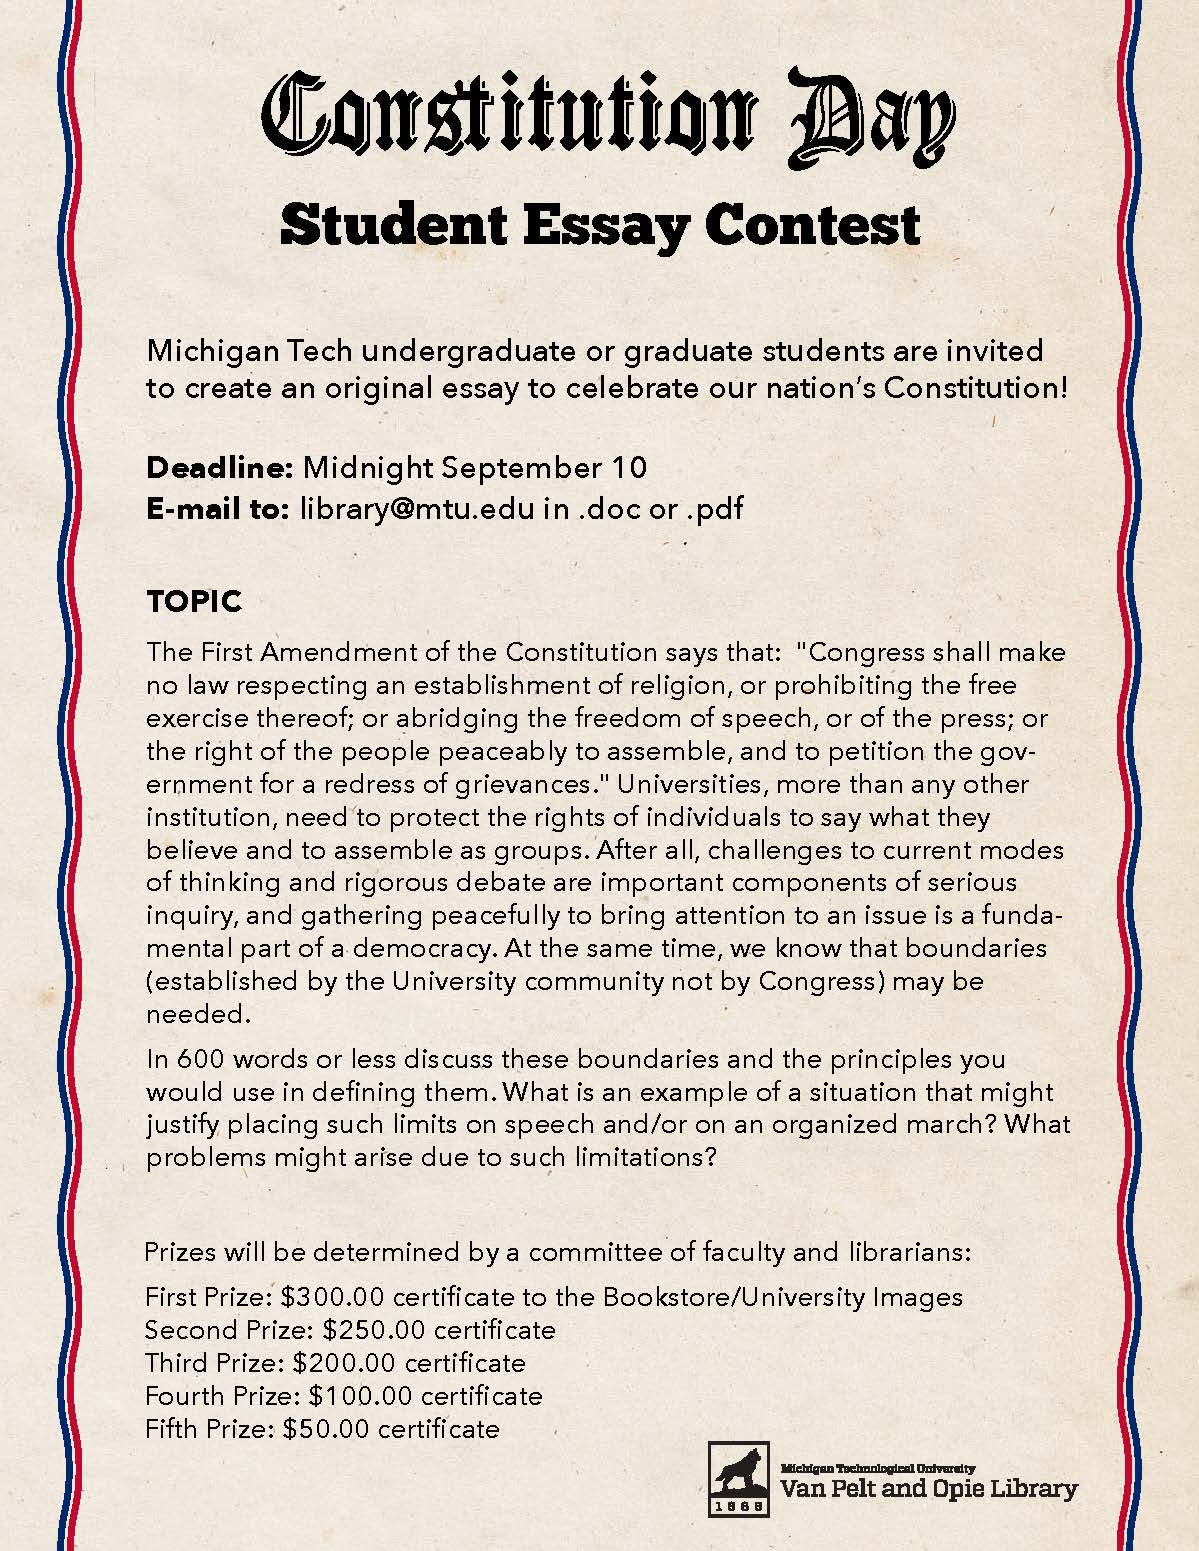 Community service essay contest